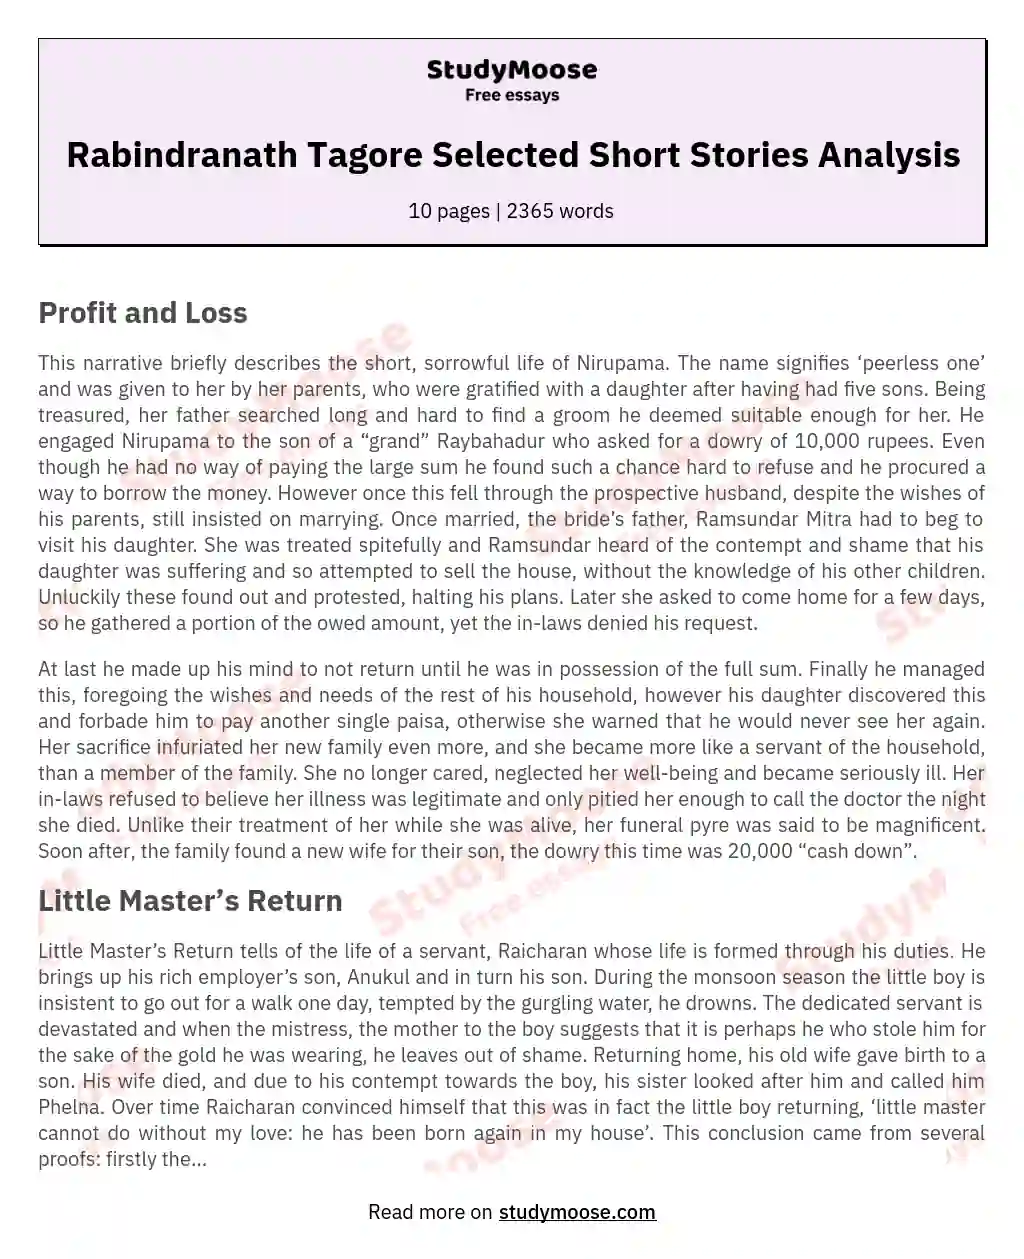 Rabindranath Tagore Selected Short Stories Analysis essay